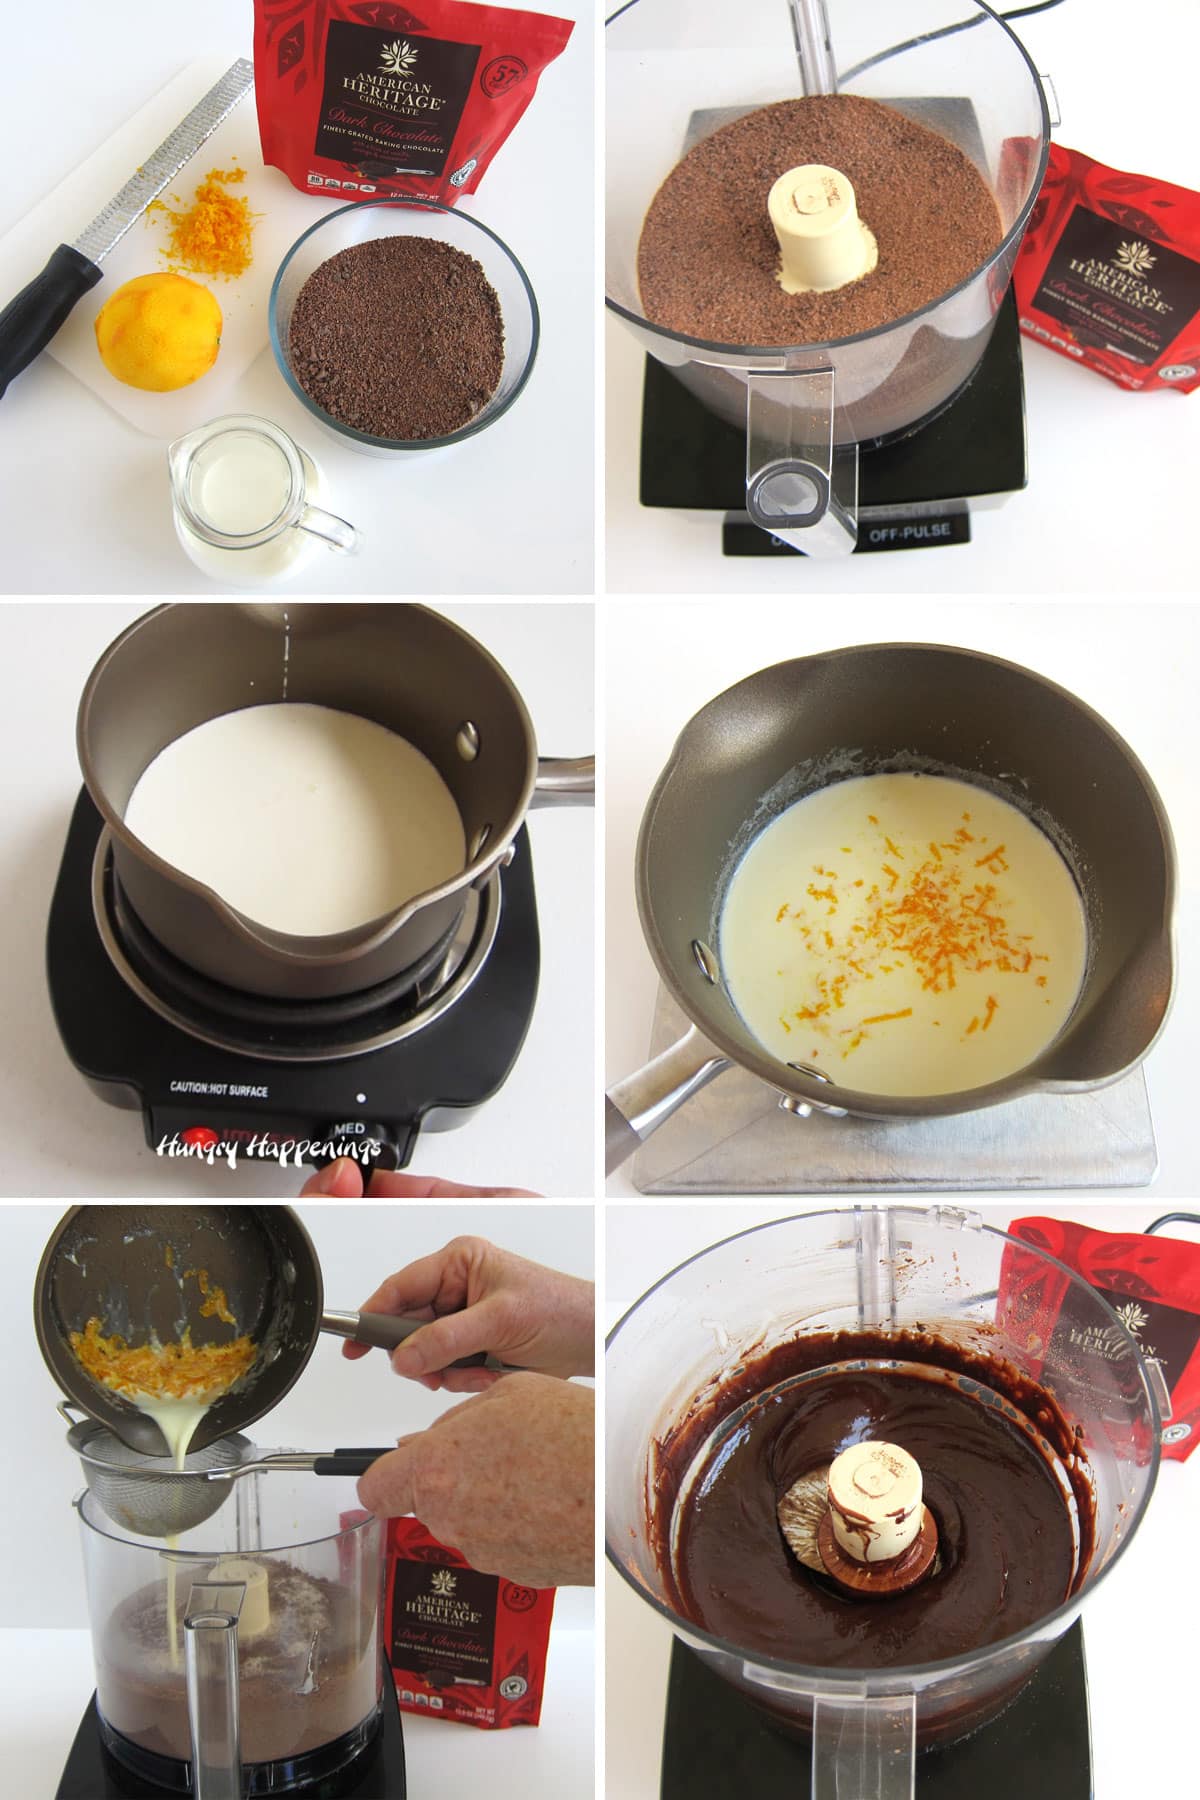 How to make orange chocolate ganache using Heritage Chocolate, heavy whipping cream, and orange zest.